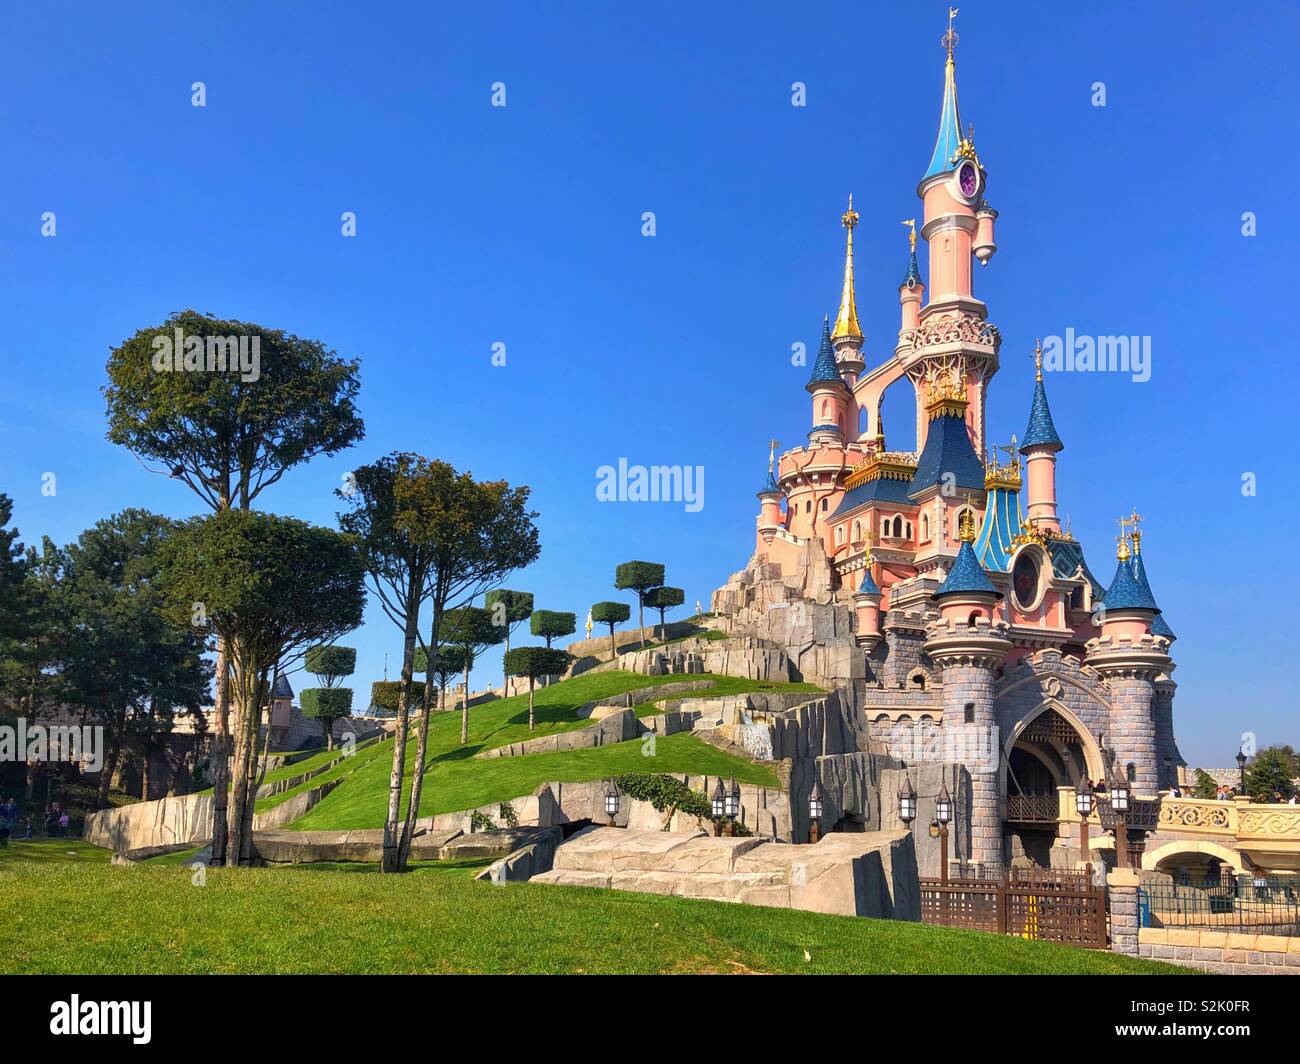 Download free photo of Beautiful,paris,wallpaper,disneyland park,magic  kingdom - from